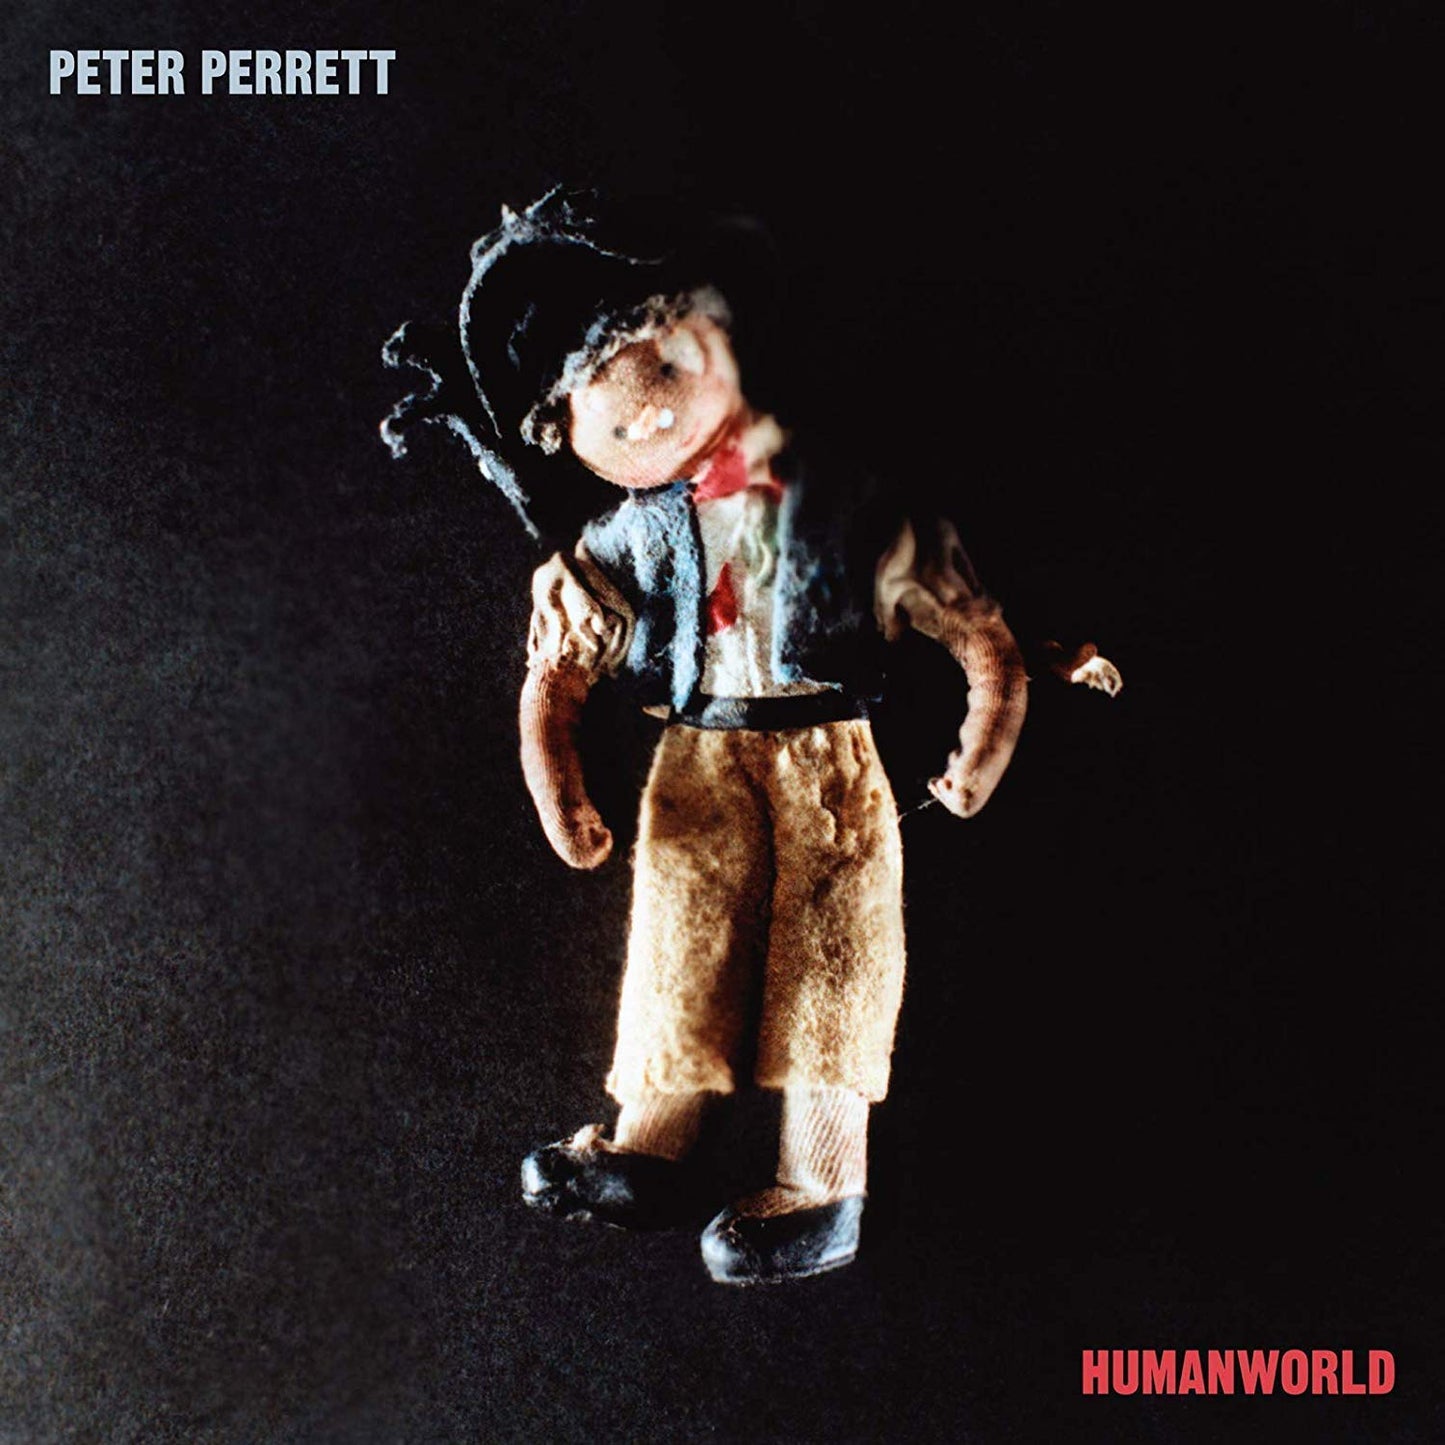 Peter Perrett - Humanworld - CD